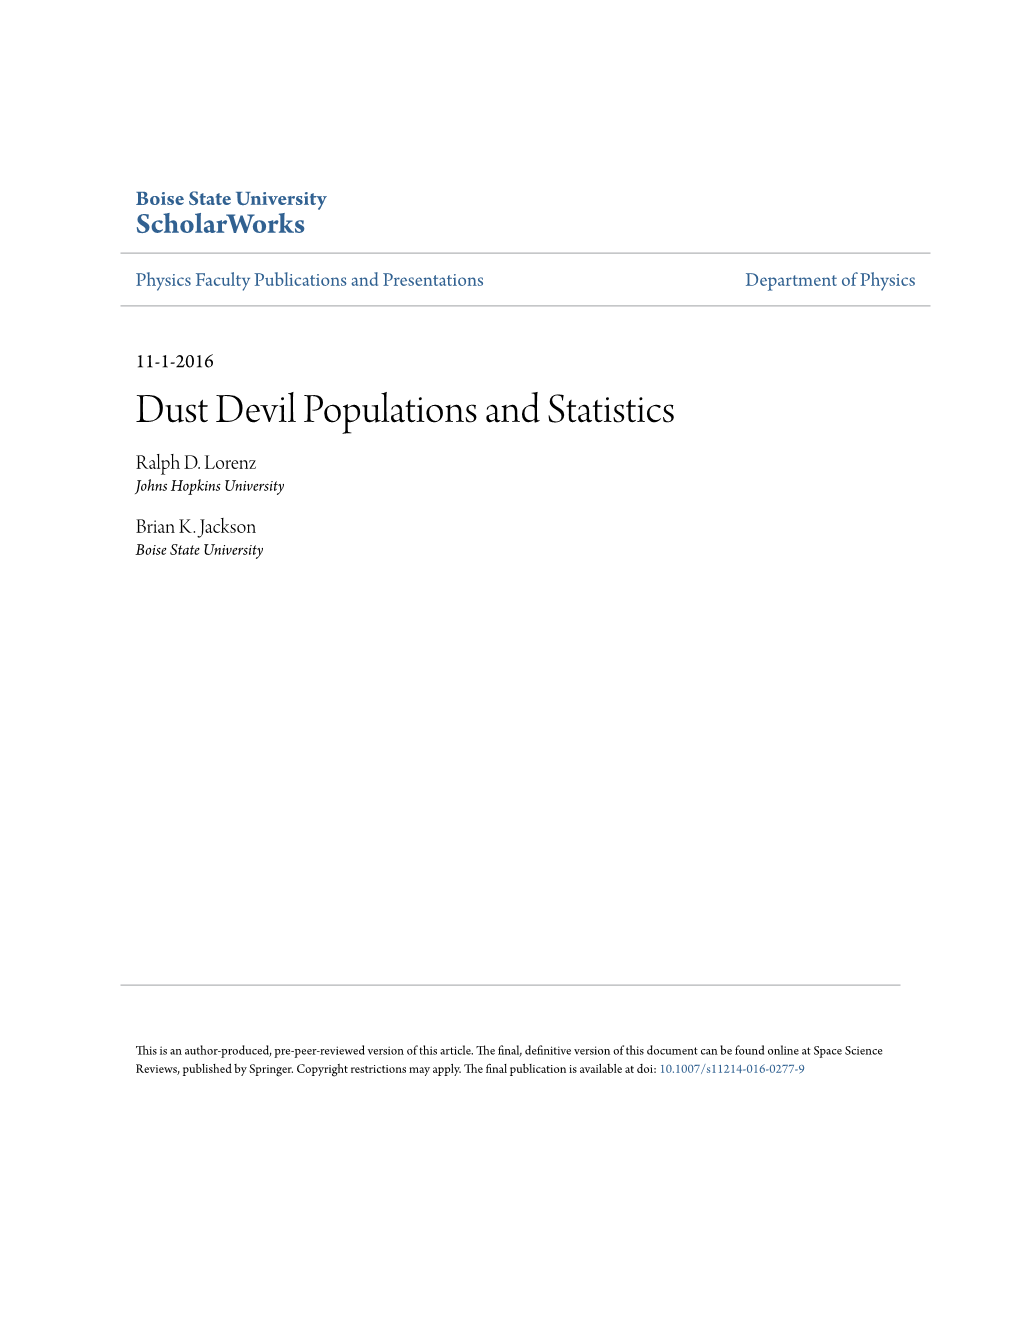 Dust Devil Populations and Statistics Ralph D